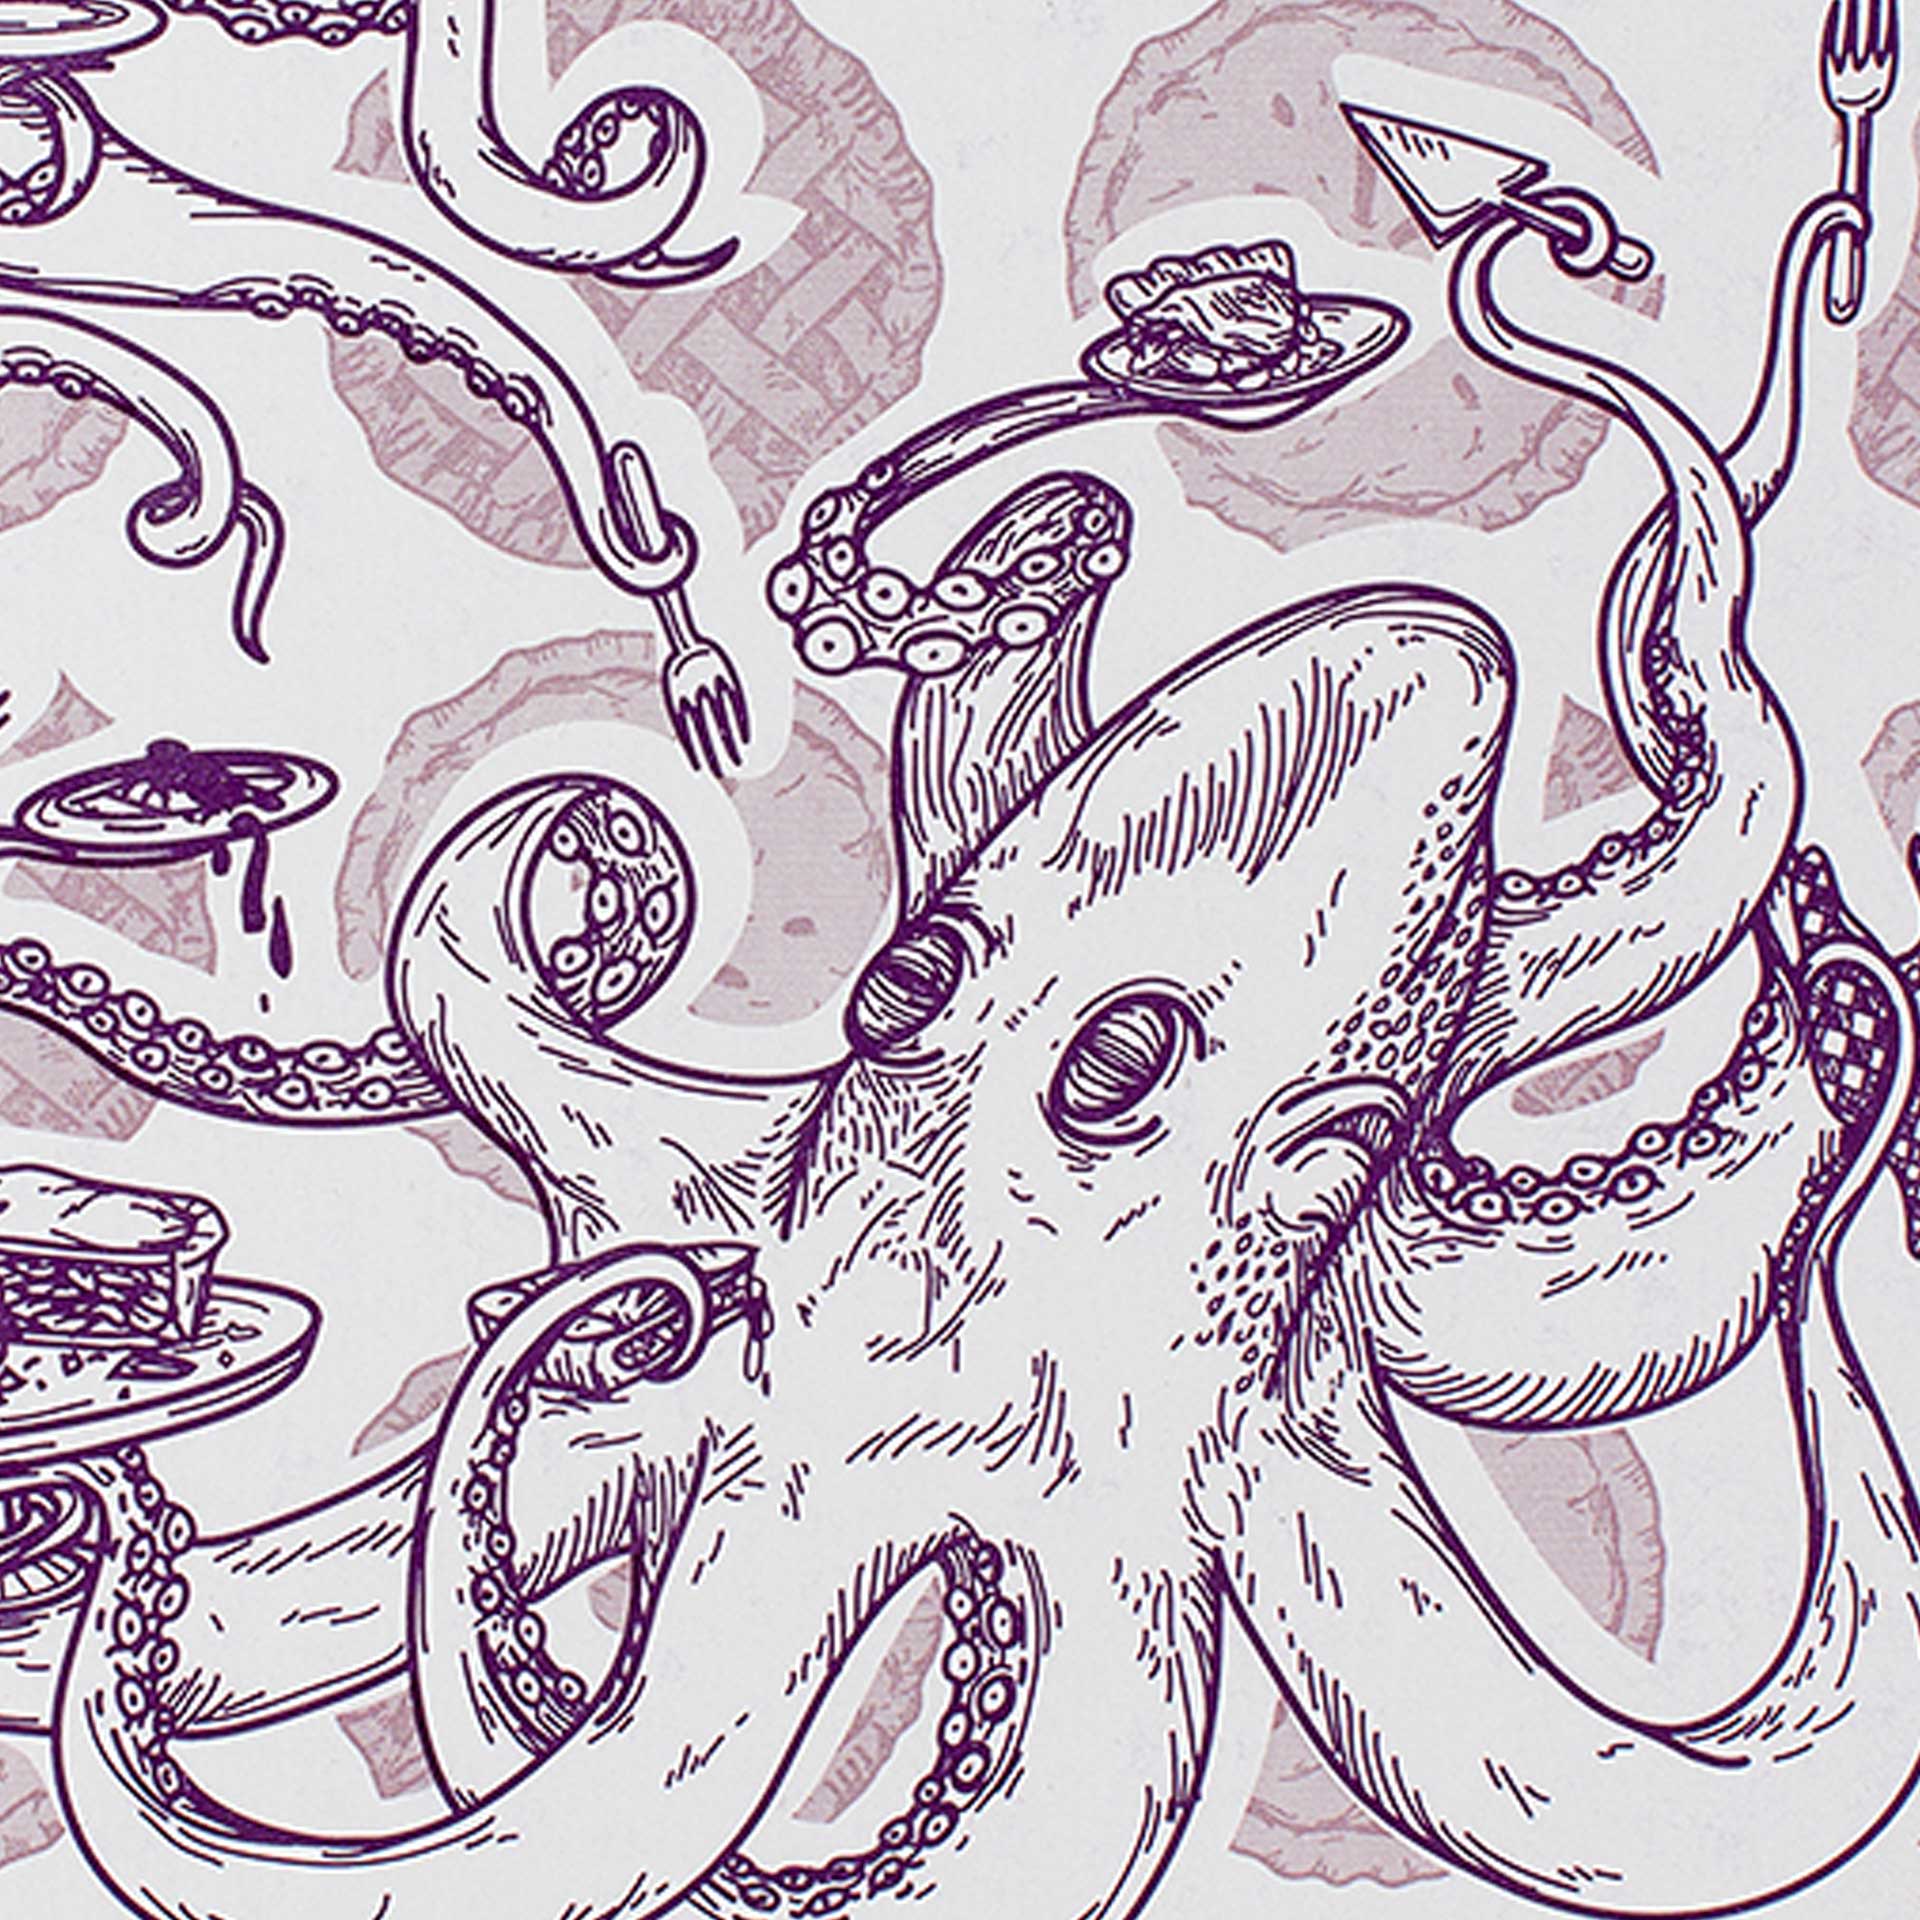 Closeup of octopuses serving pies